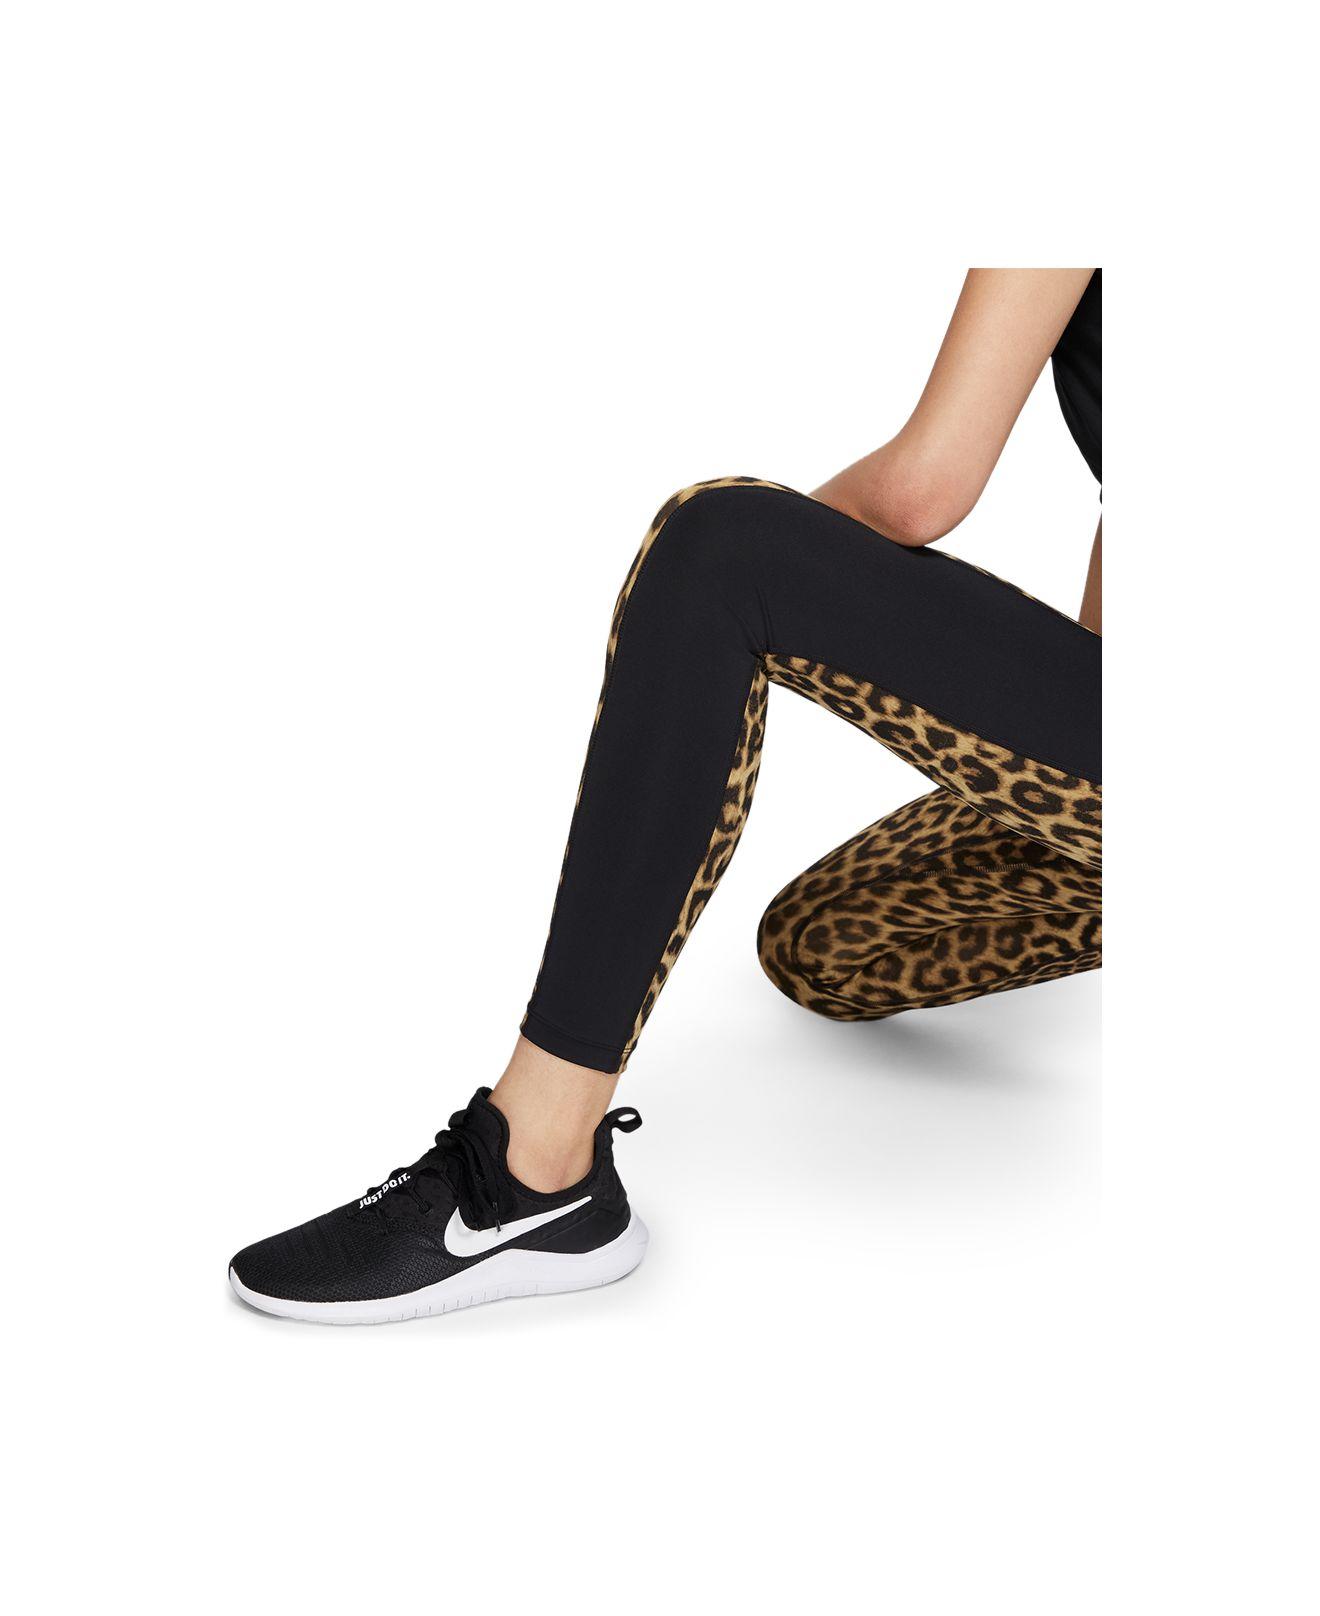 Nike Synthetic One Leopard Print Leggings in Black - Lyst